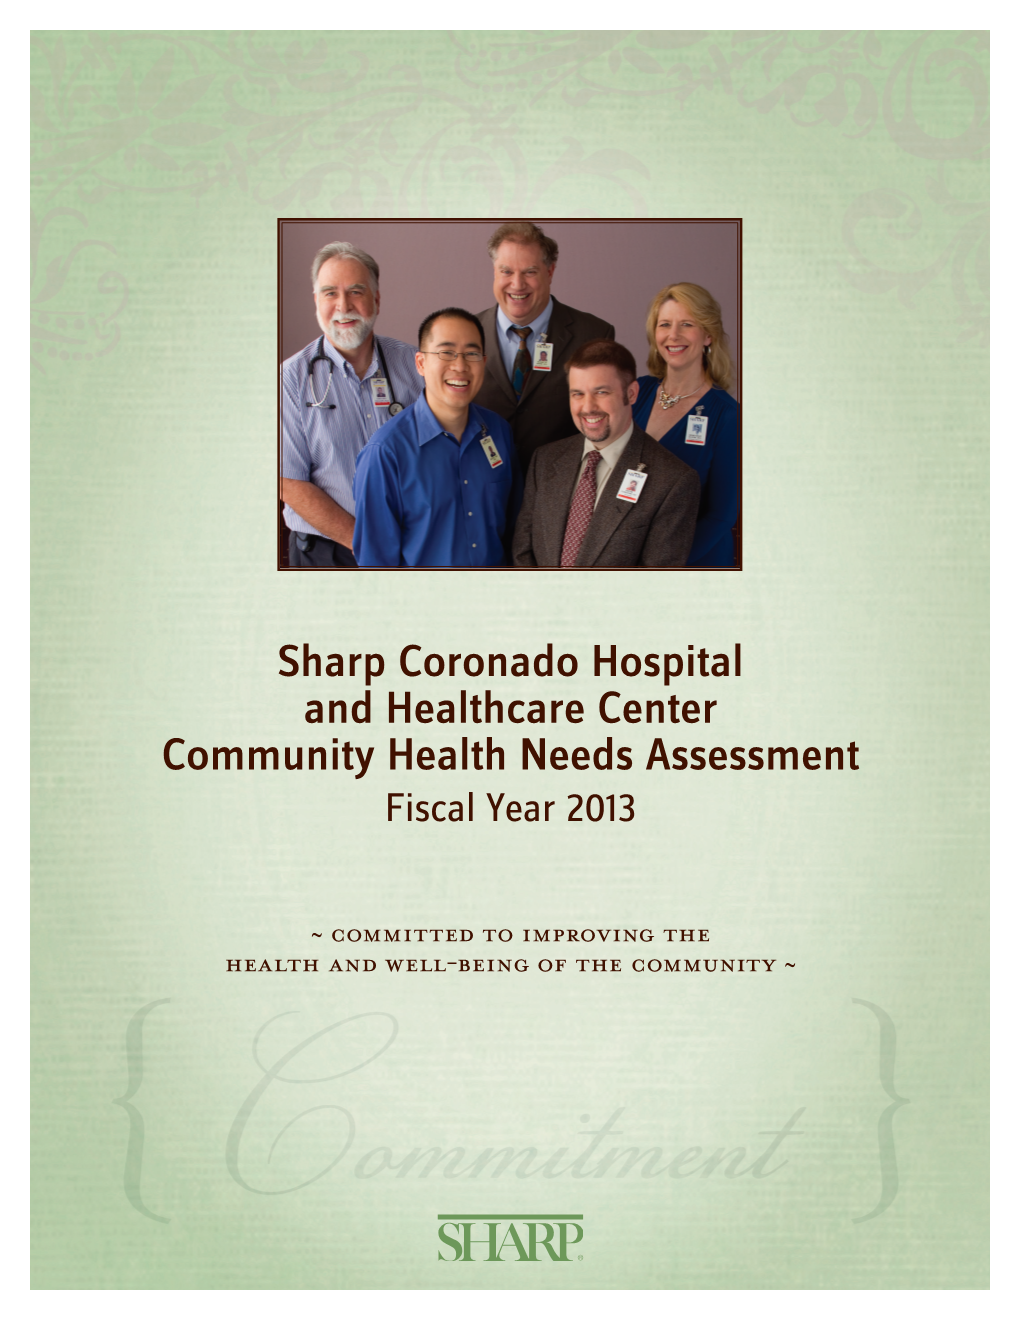 Sharp Coronado Hospital and Healthcare Center Community Health Needs Assessment Fiscal Year 2013